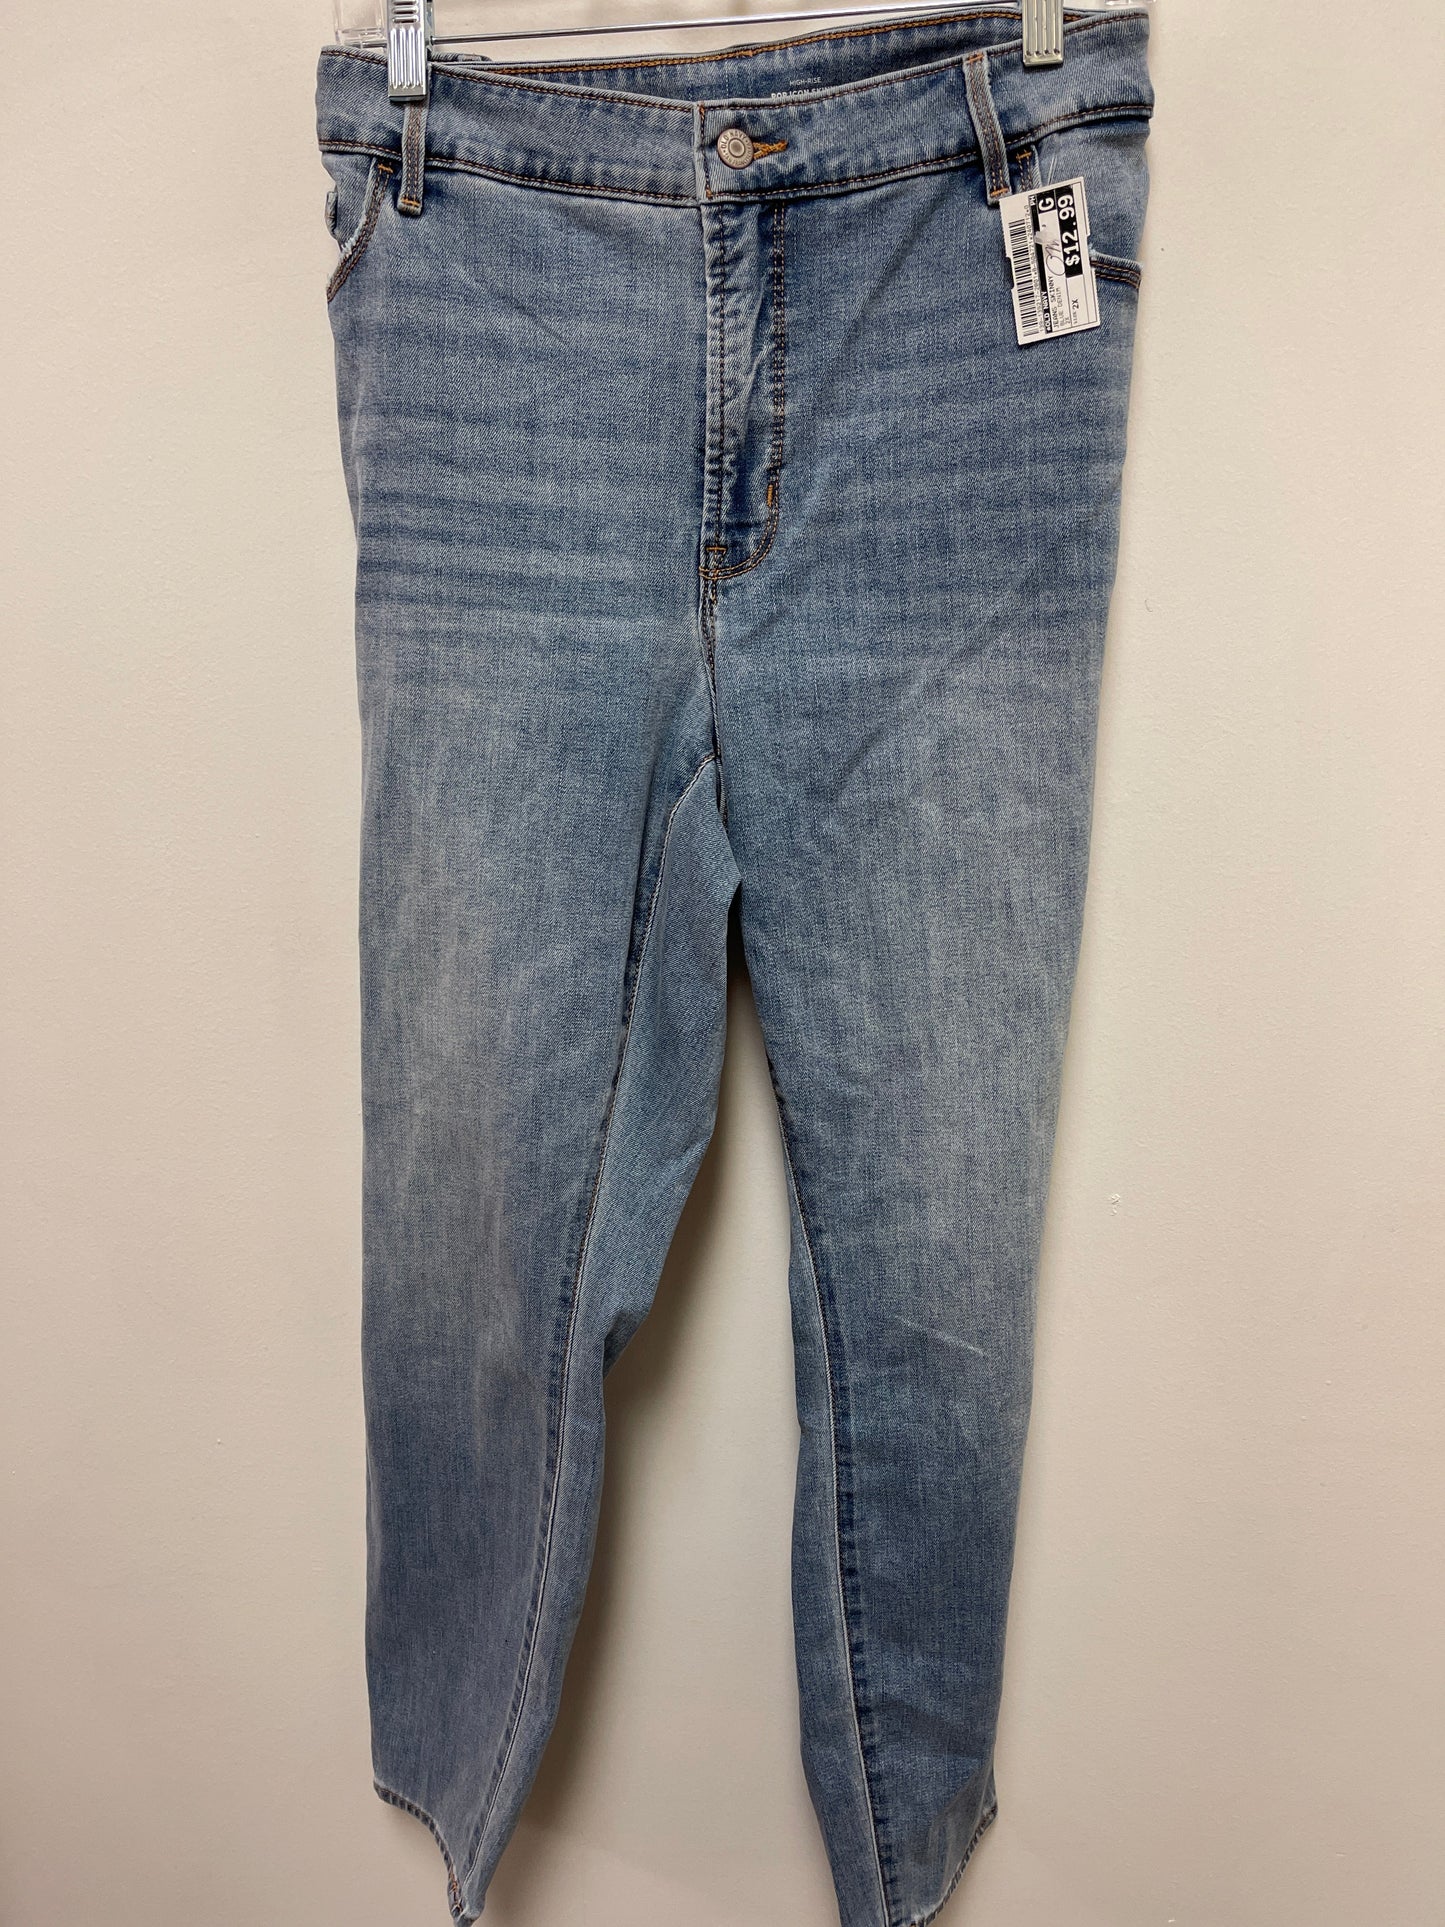 Blue Denim Jeans Skinny Old Navy, Size 2x